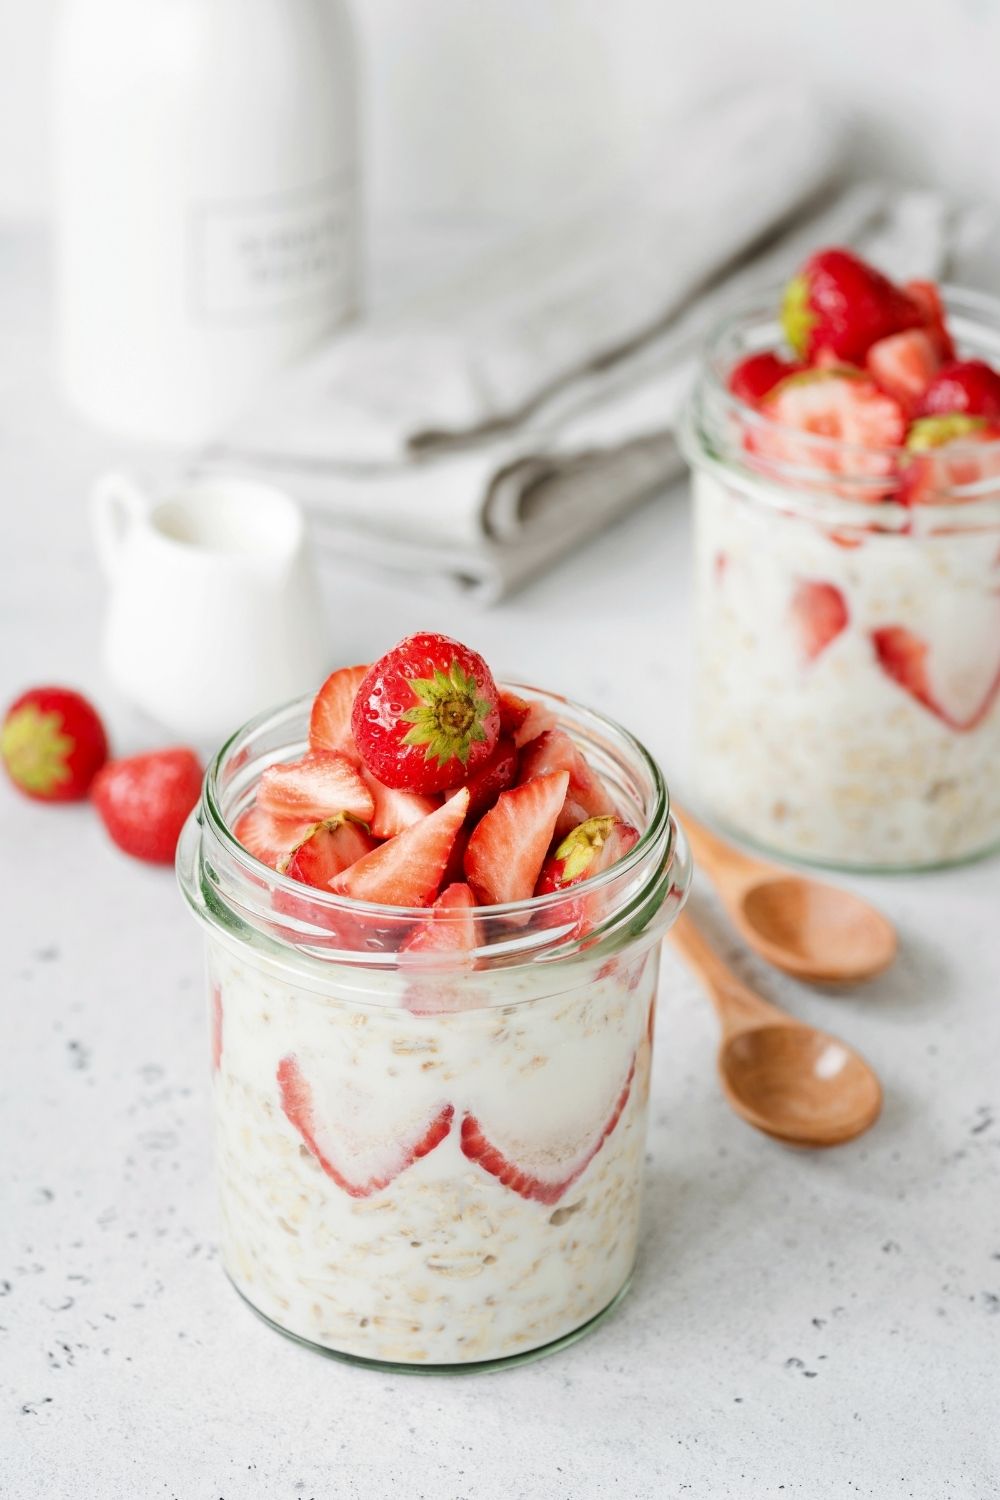 Best Ever Vegan Strawberries and Cream Overnight Oats